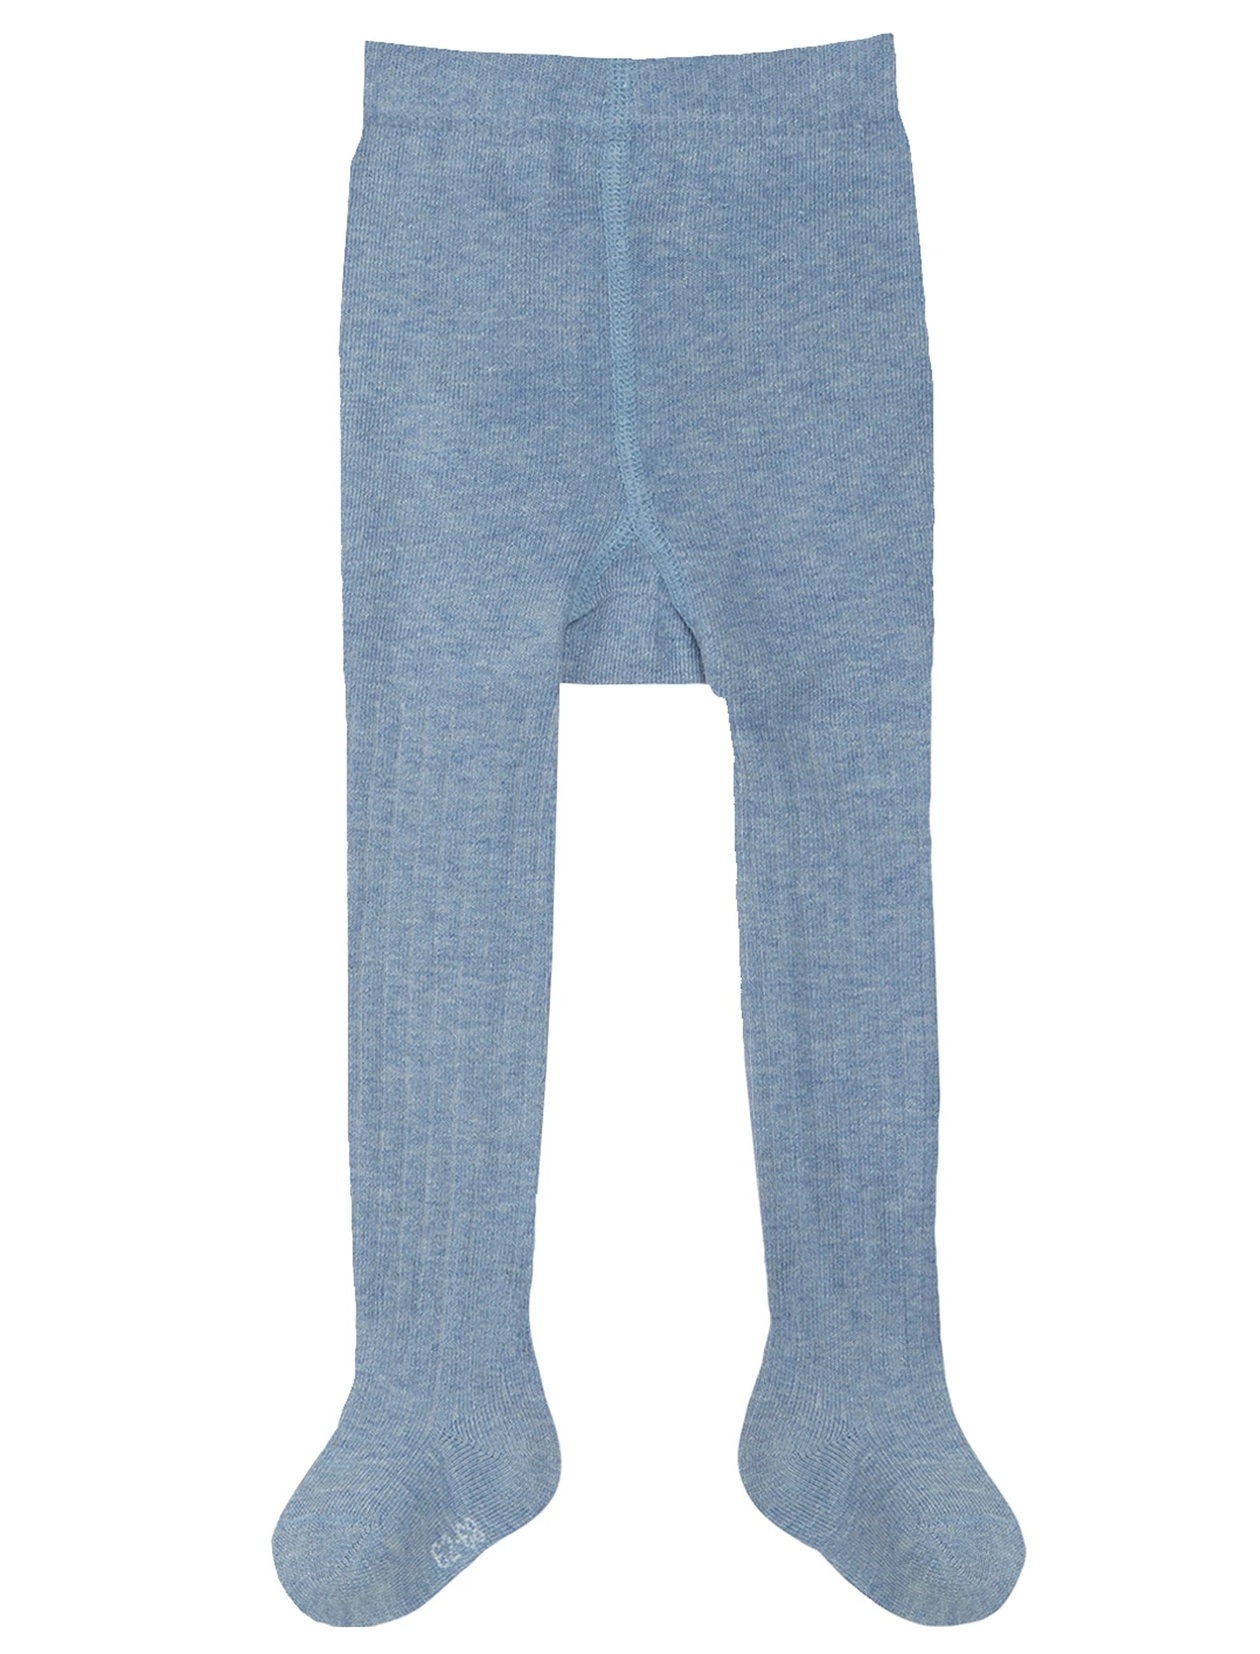 Camano Baby Strumpfhose Fashion Tights Blau - Sockenduo